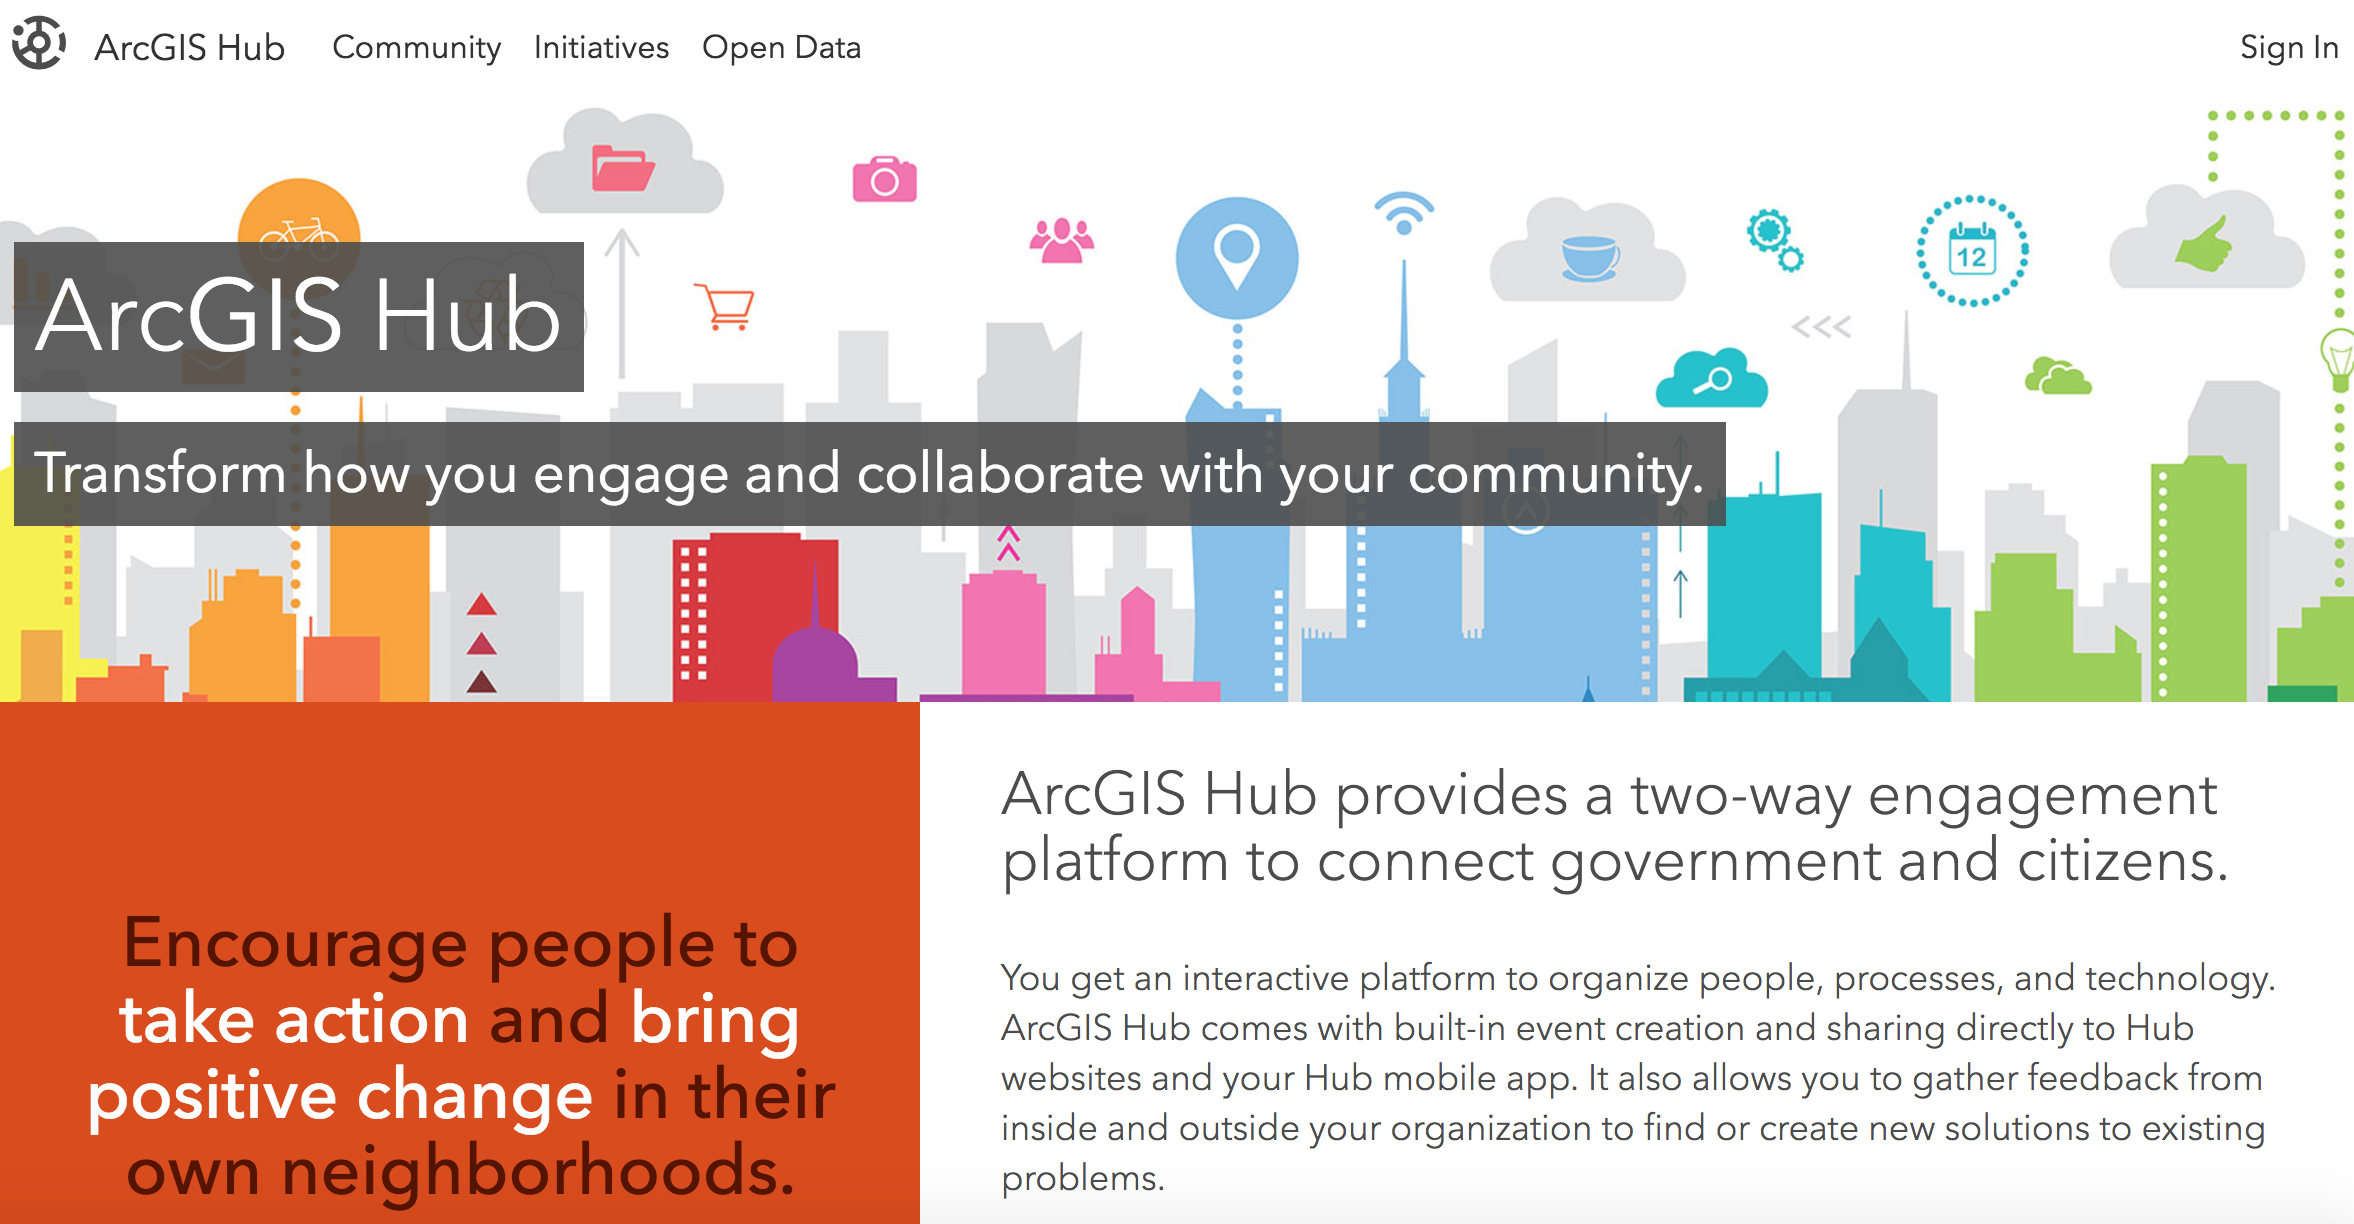 ArcGIS Hub